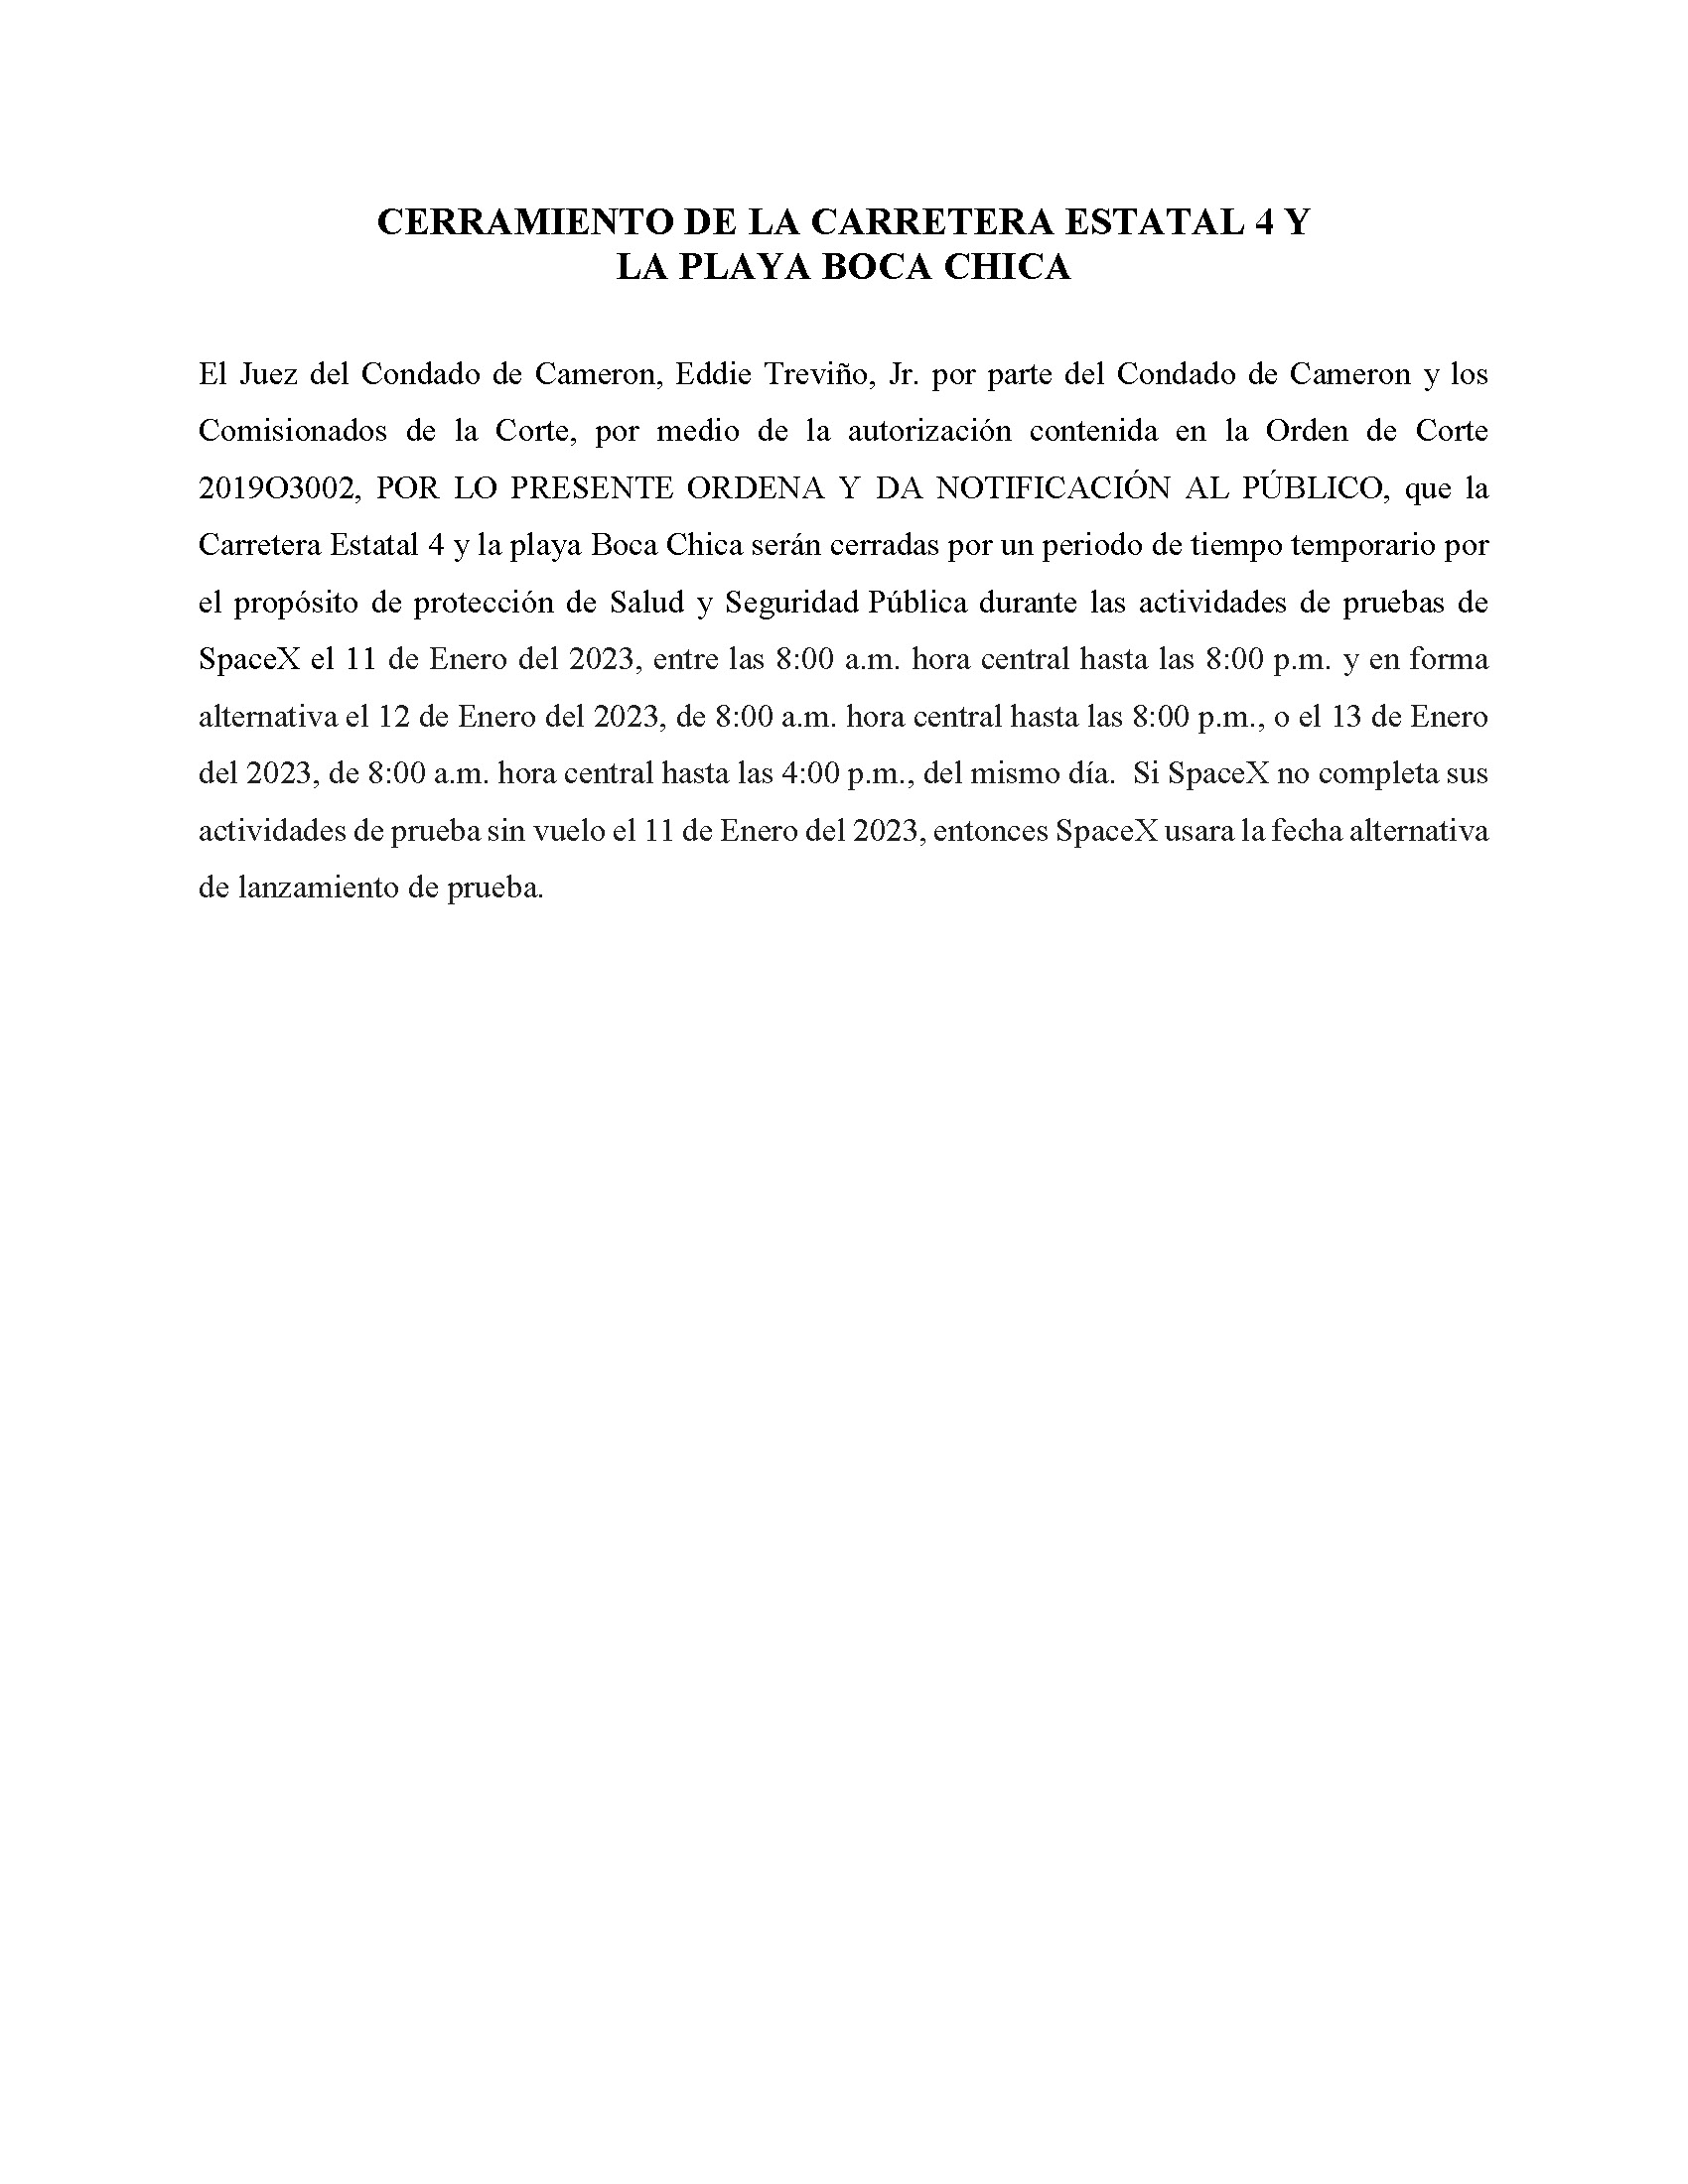 ORDER.CLOSURE OF HIGHWAY 4 Y LA PLAYA BOCA CHICA.SPANISH.01.11.23